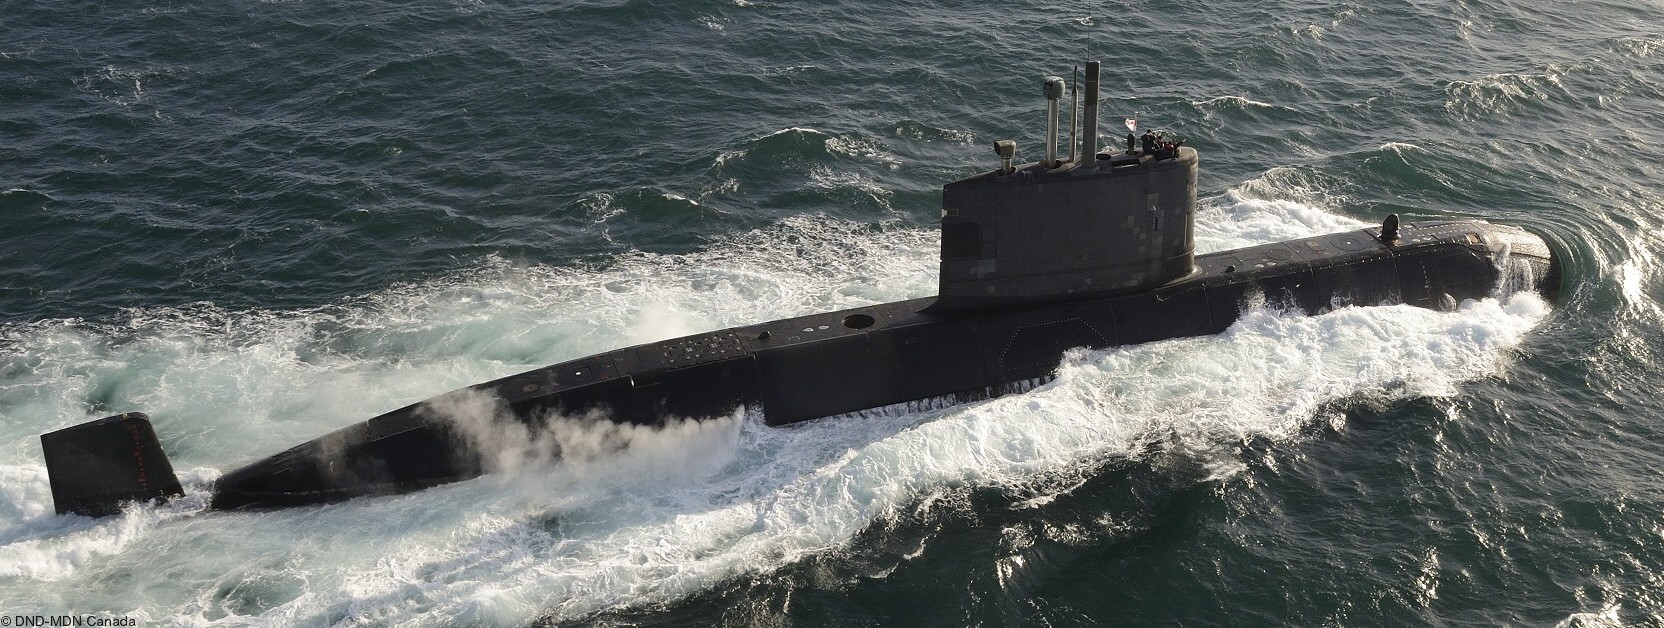 ssk-876 hmcs victoria upholder class attack submarine hunter killer ncsm royal canadian navy 46